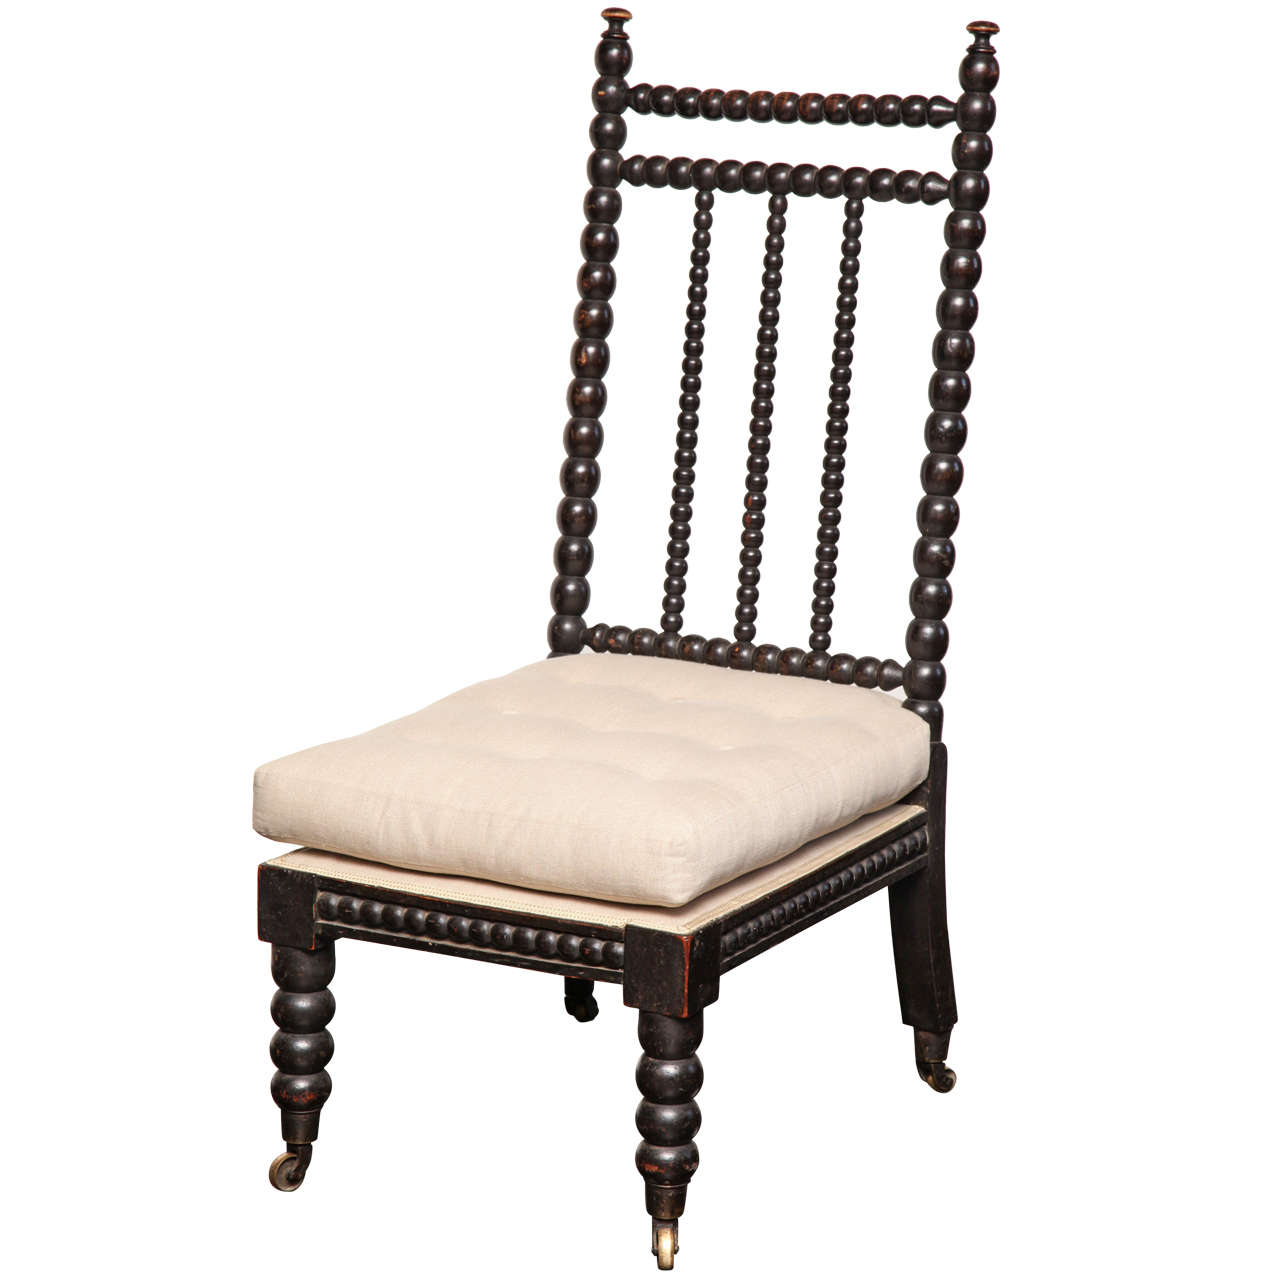 19th Century Irish Spool Chair